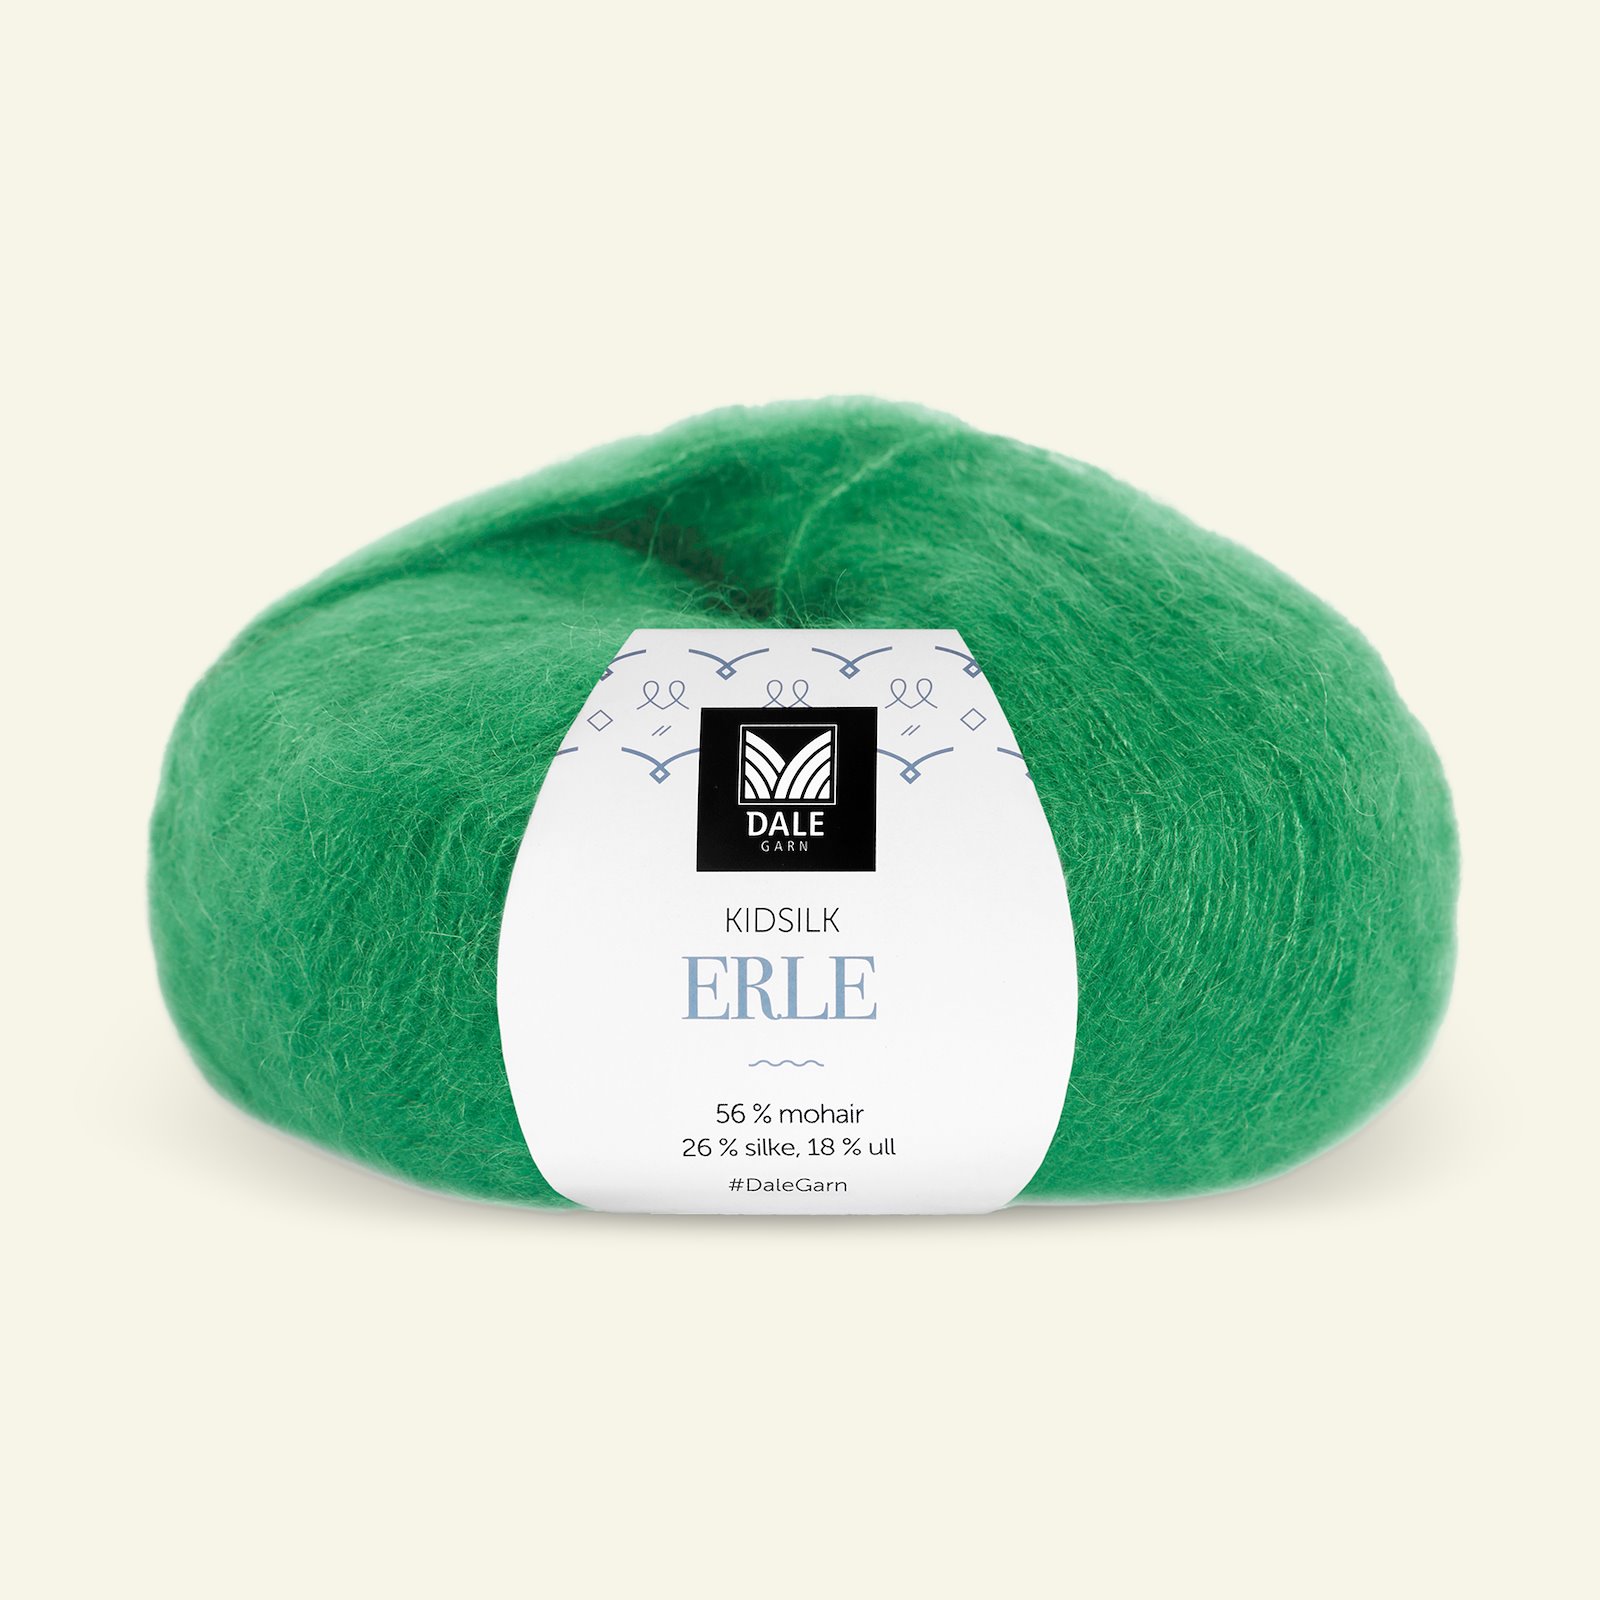 Dale Garn, silk mohair uldgarn "Kidsilk Erle", grøn (9073) 90000799_pack